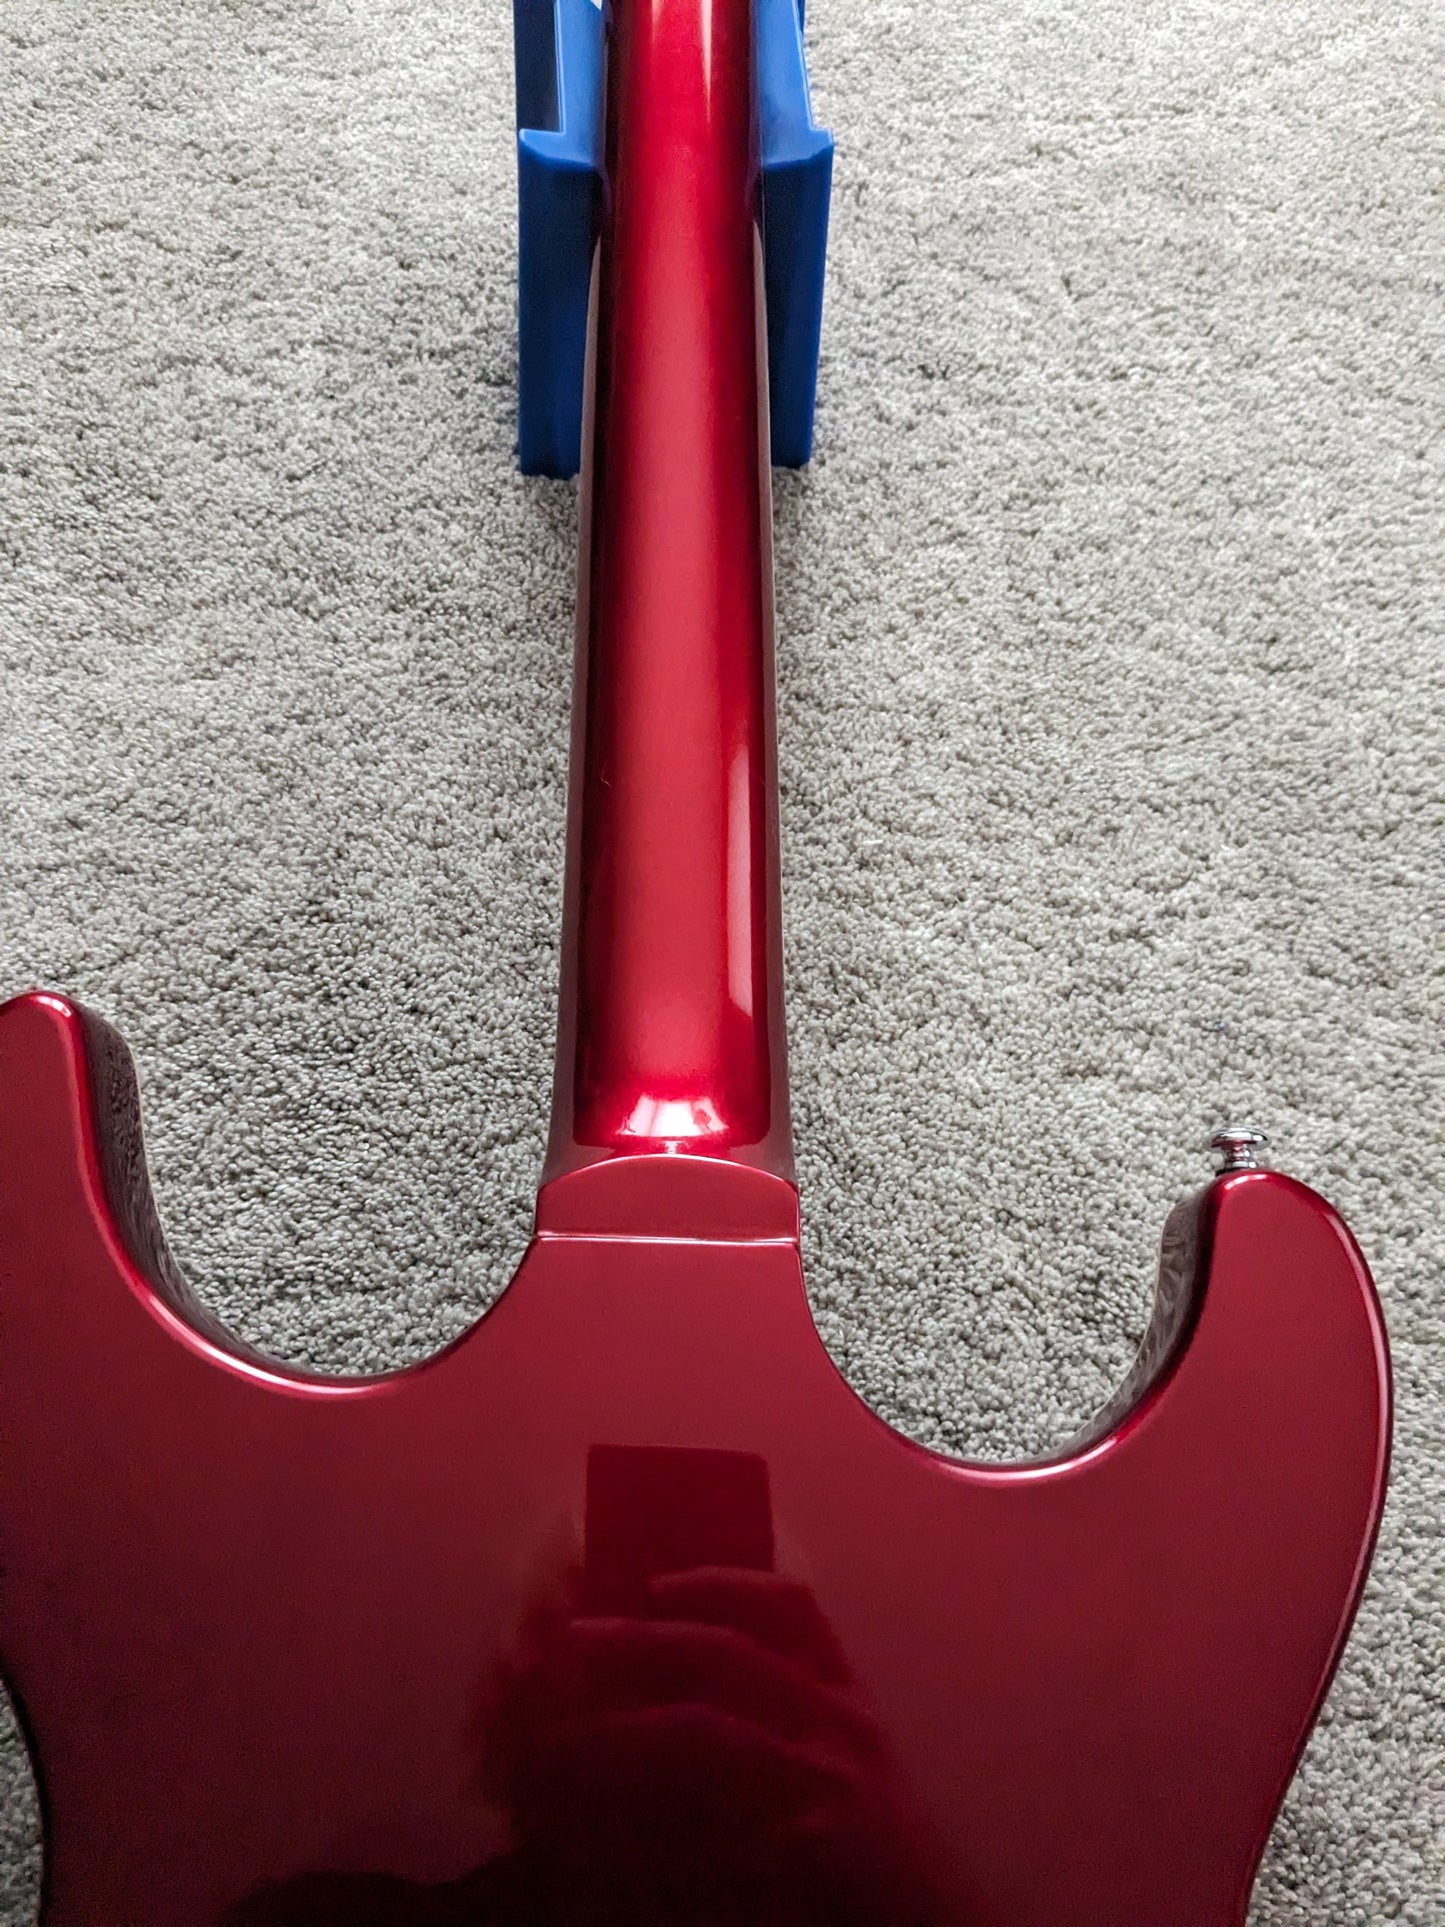 Eastwood Sidejack Baritone DLX-M with Maple Fretboard 2022 - Present - Red